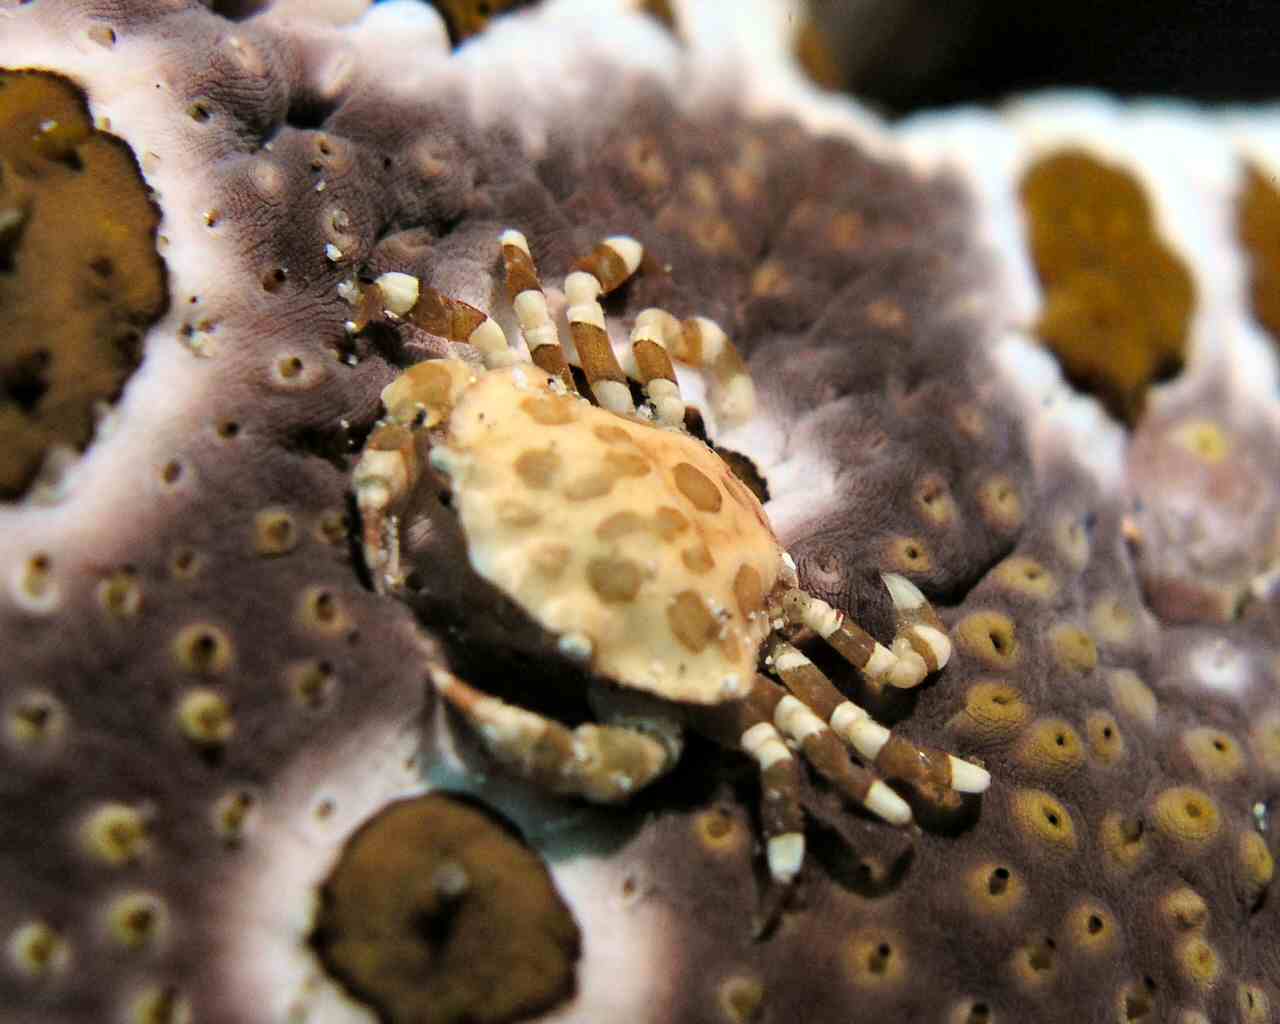 Crab on a sea cucumber at Lembeh